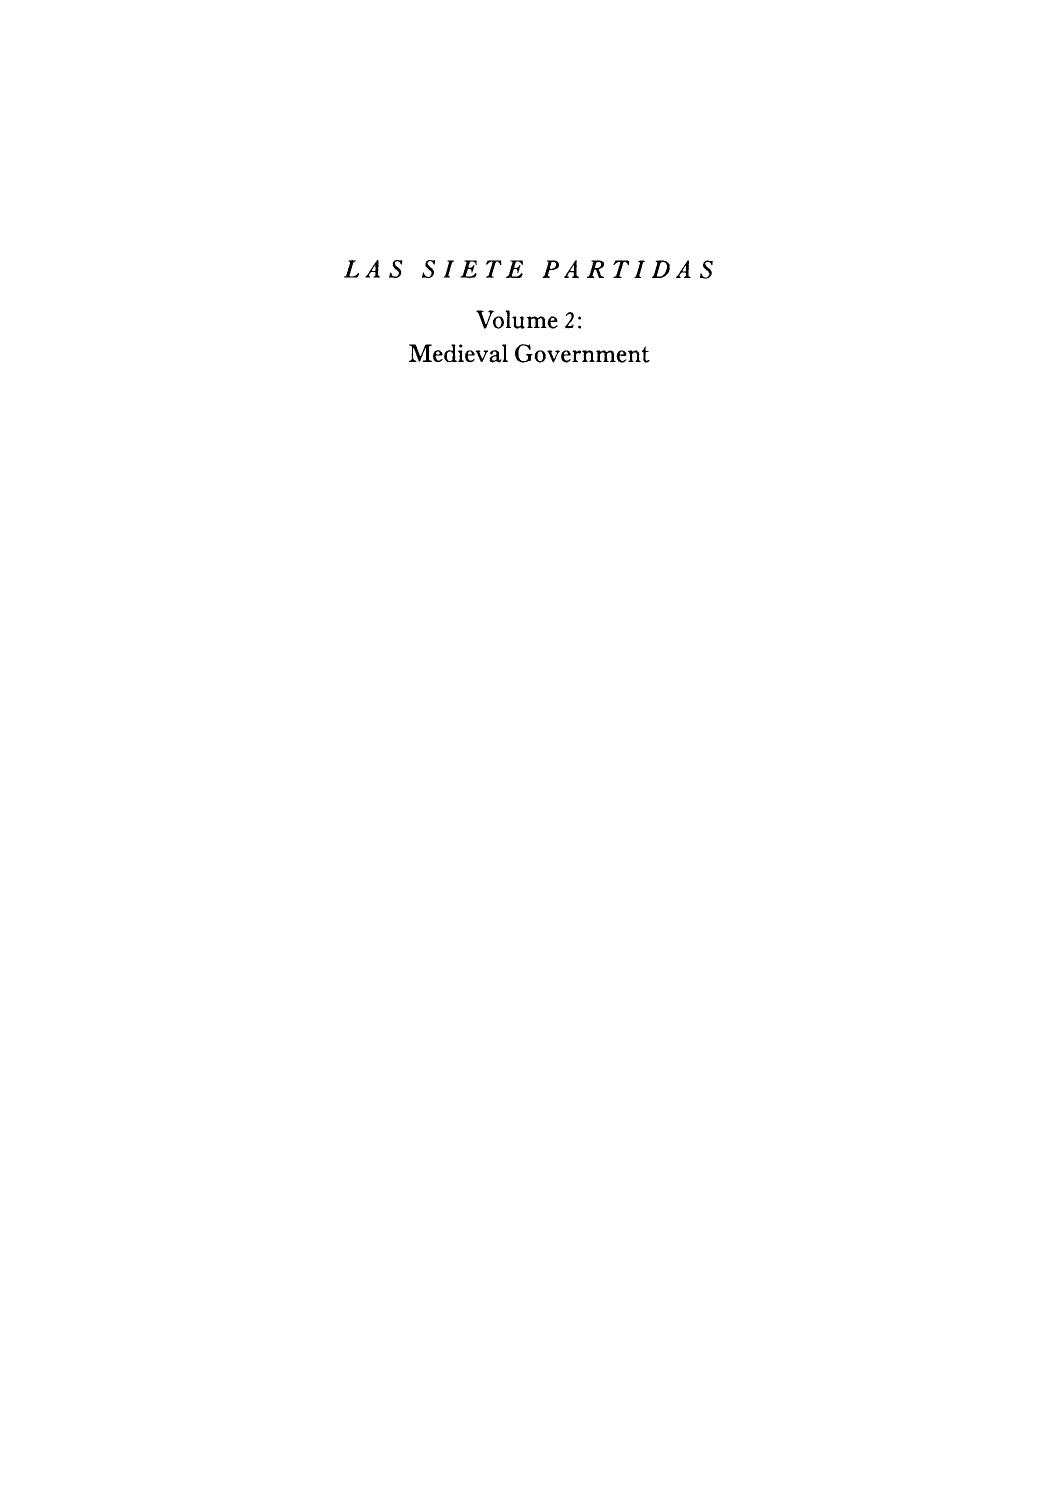 Las Siete Partidas, Volume 2: Medieval Government: The World of Kings and Warriors (Partida II) by Samuel Parsons Scott (translator) Robert I. Burns (editor)